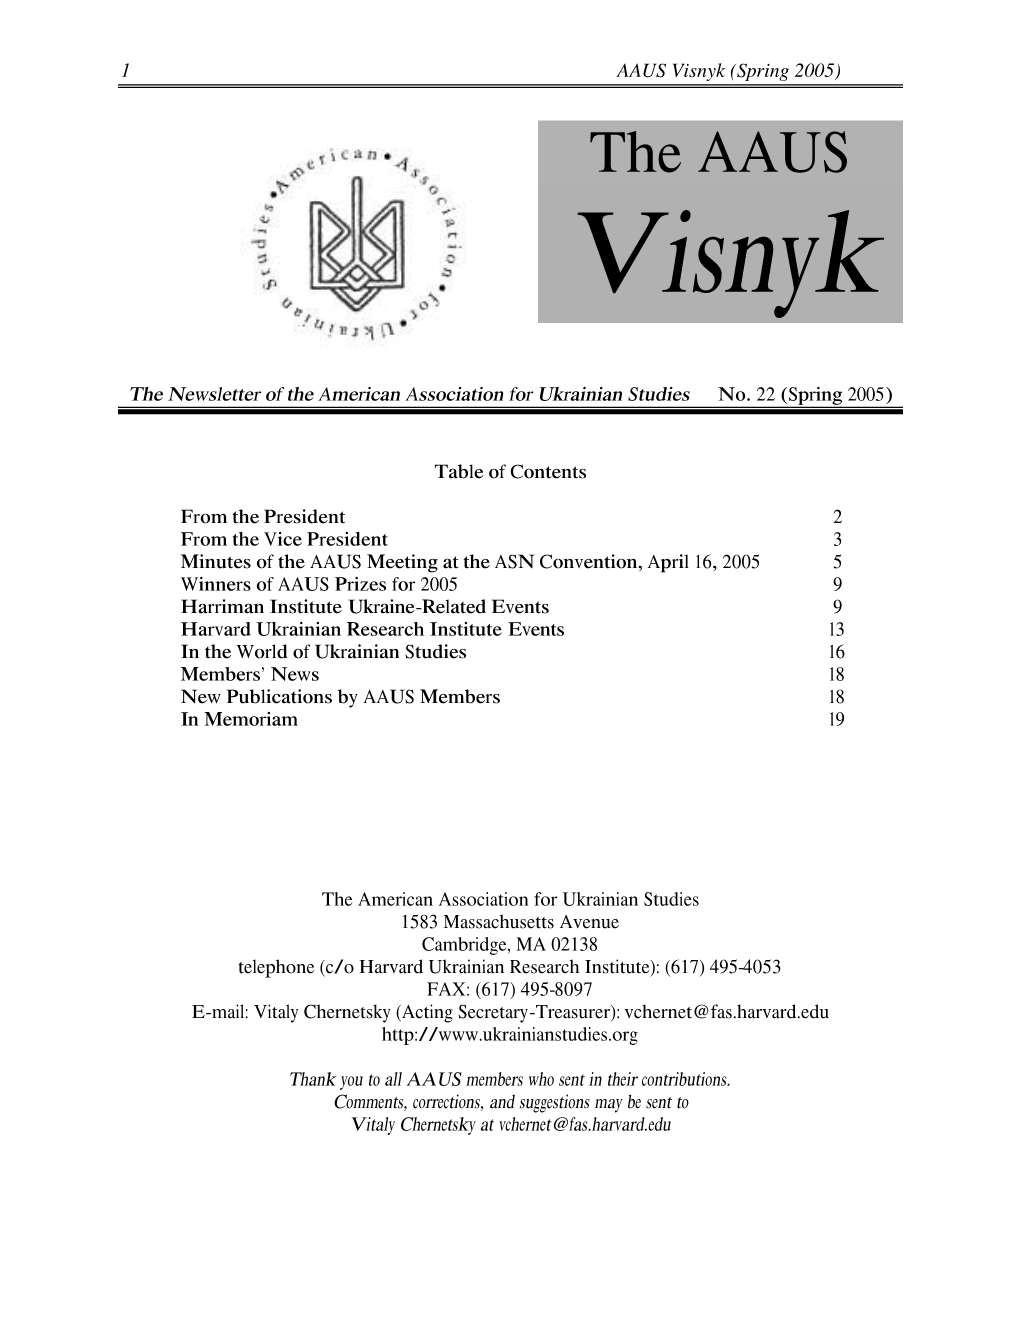 The AAUS Visnyk